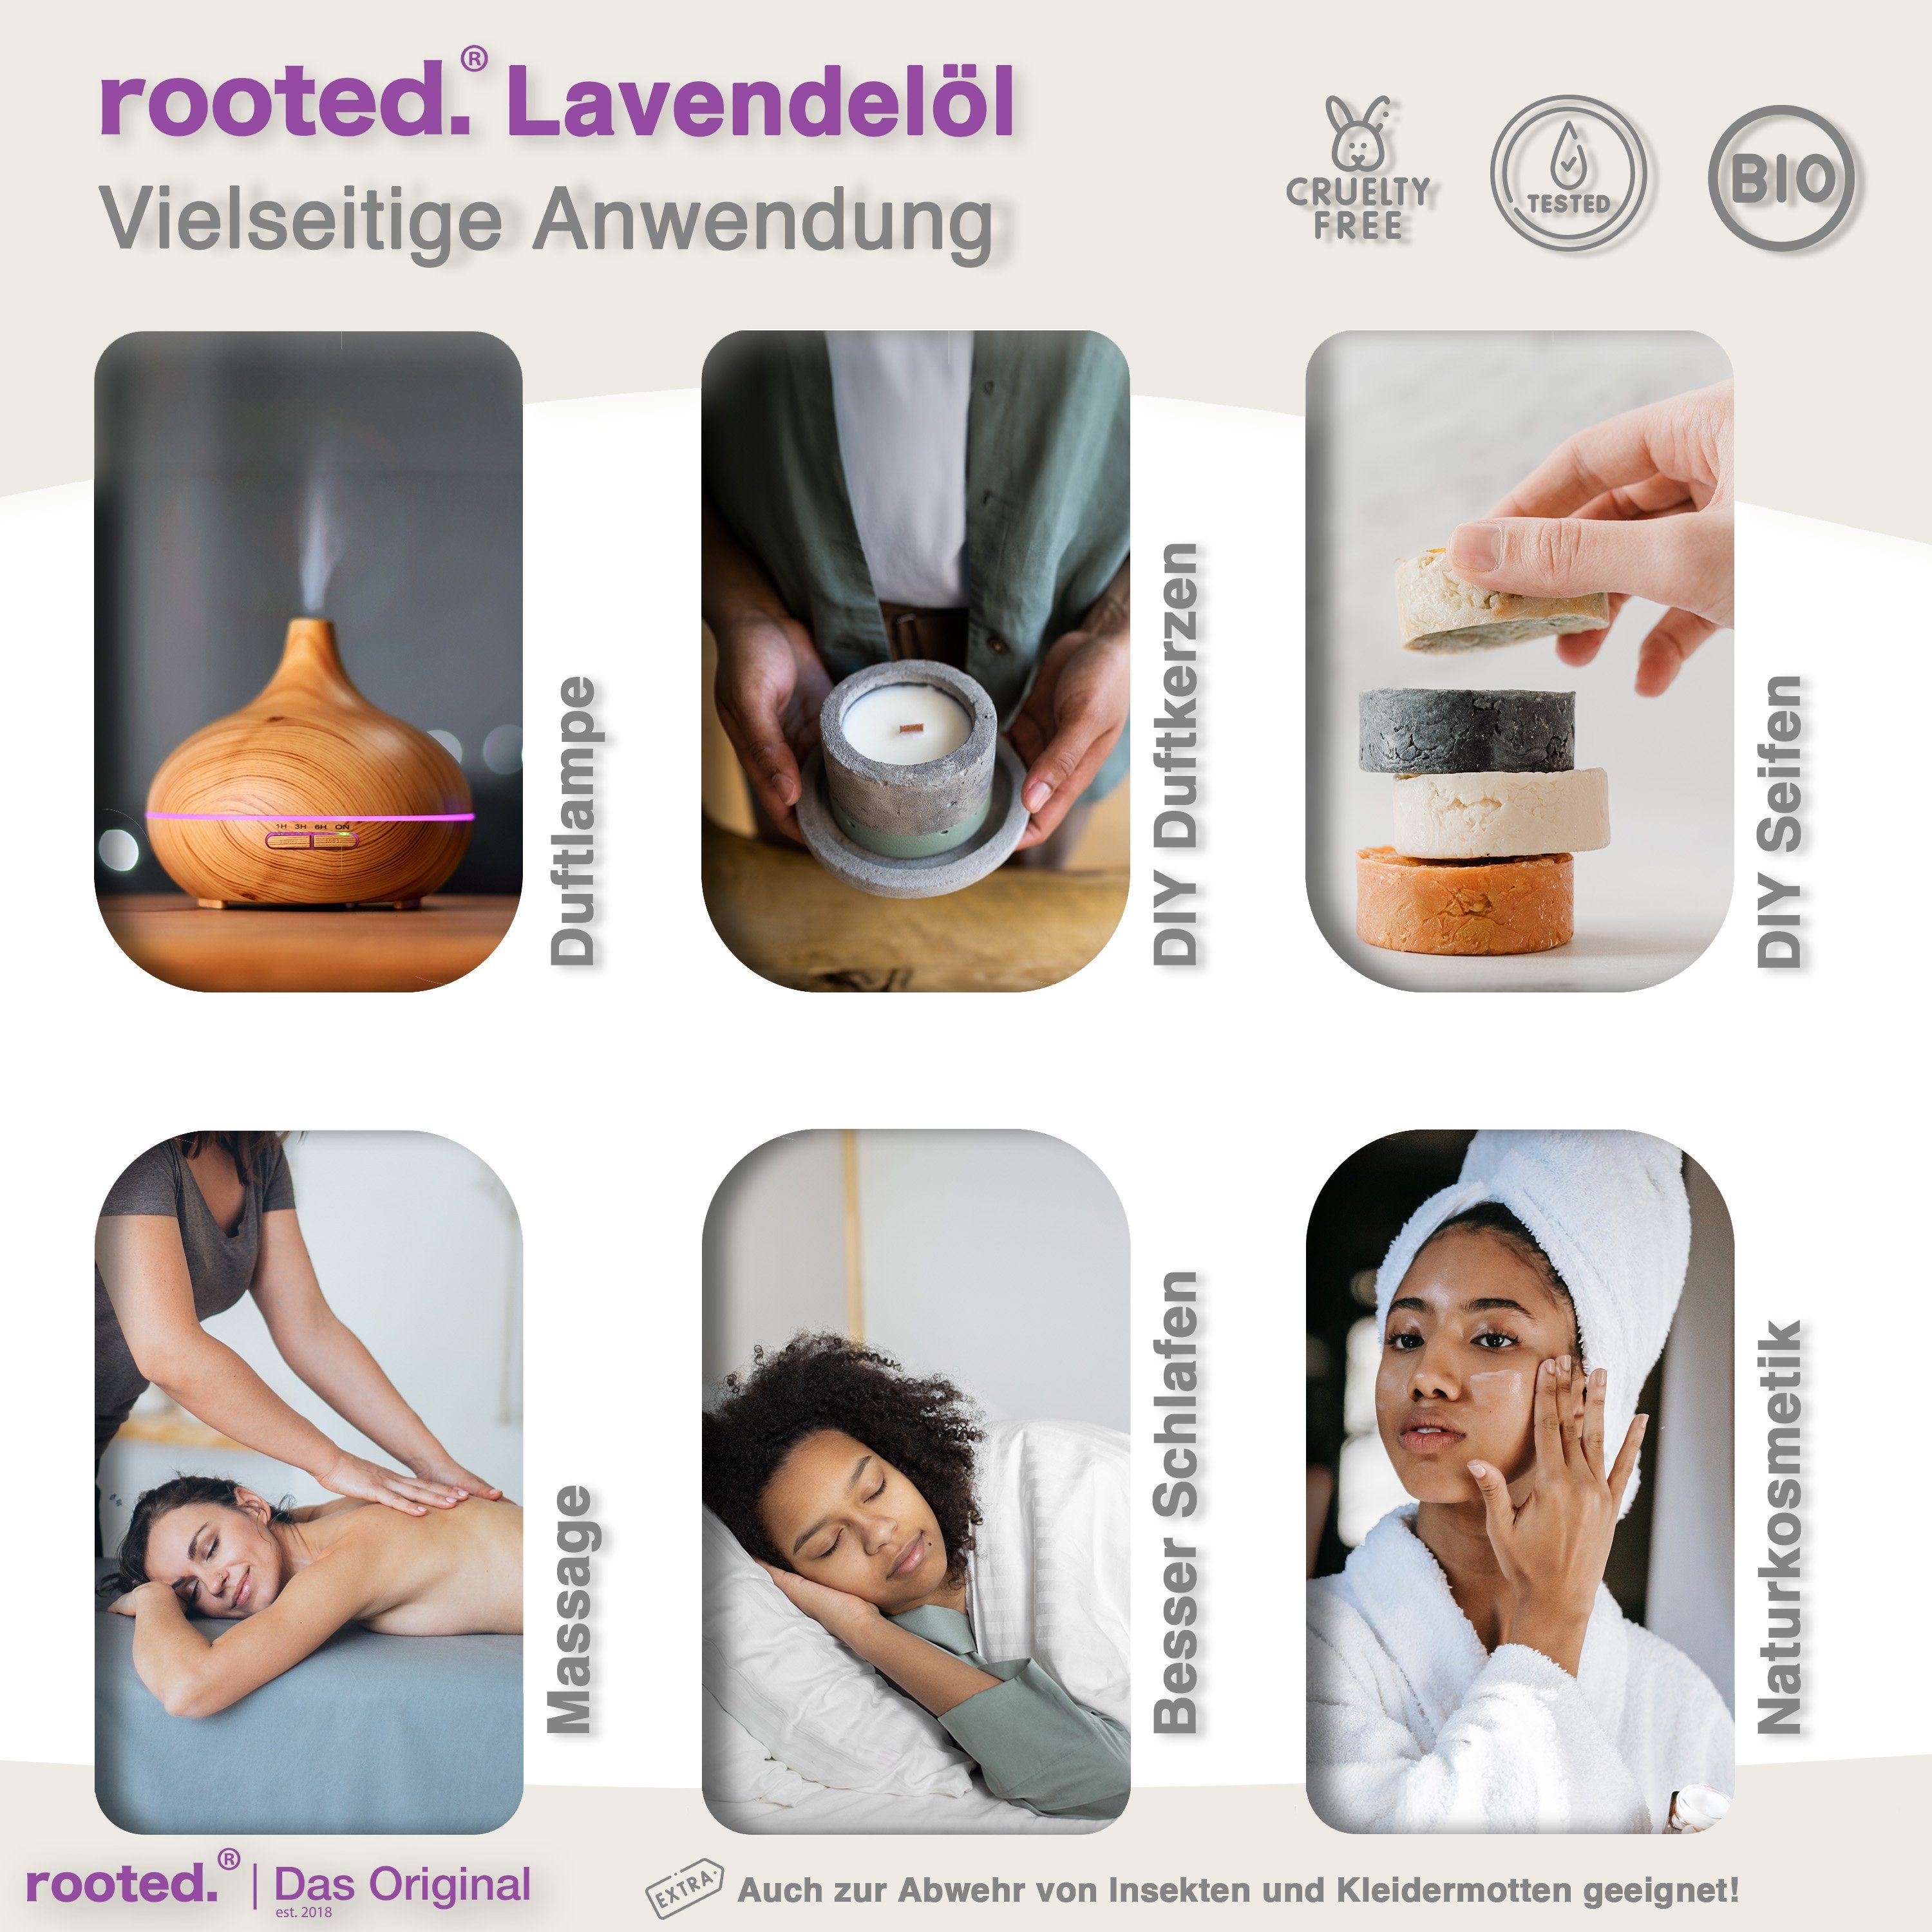 angustifolia rooted.®, Lavendelöl, Körperöl ätherisches Lavandula 10ml rooted.